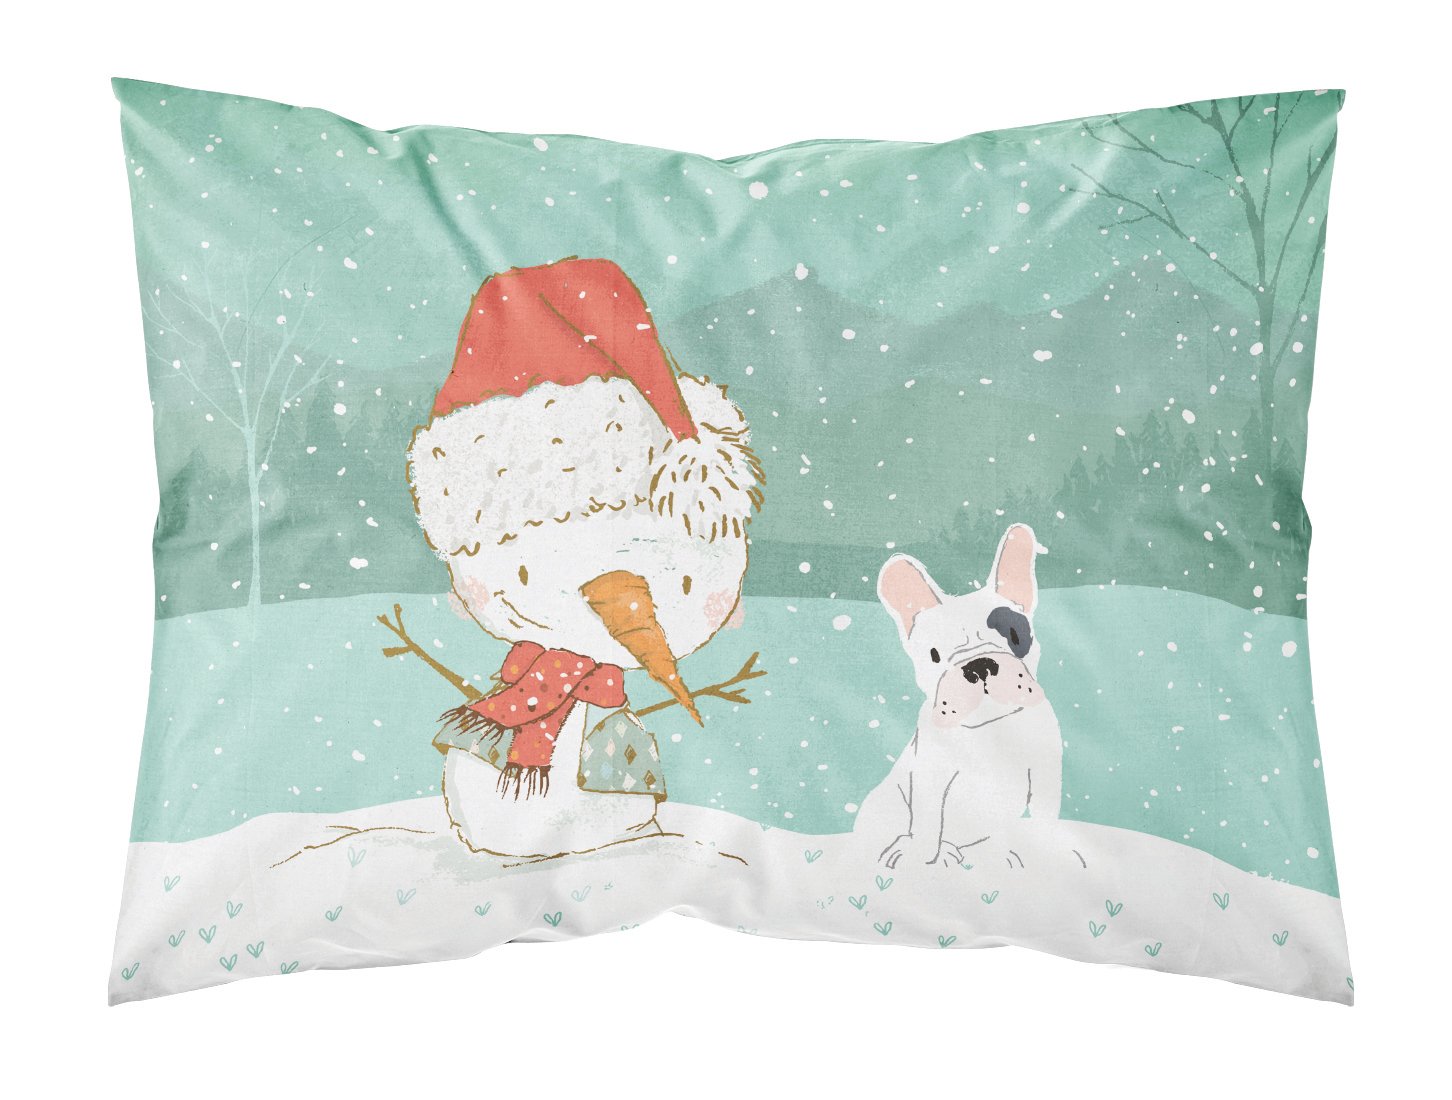 Piebald French Bulldog Snowman Christmas Fabric Standard Pillowcase CK2087PILLOWCASE by Caroline's Treasures